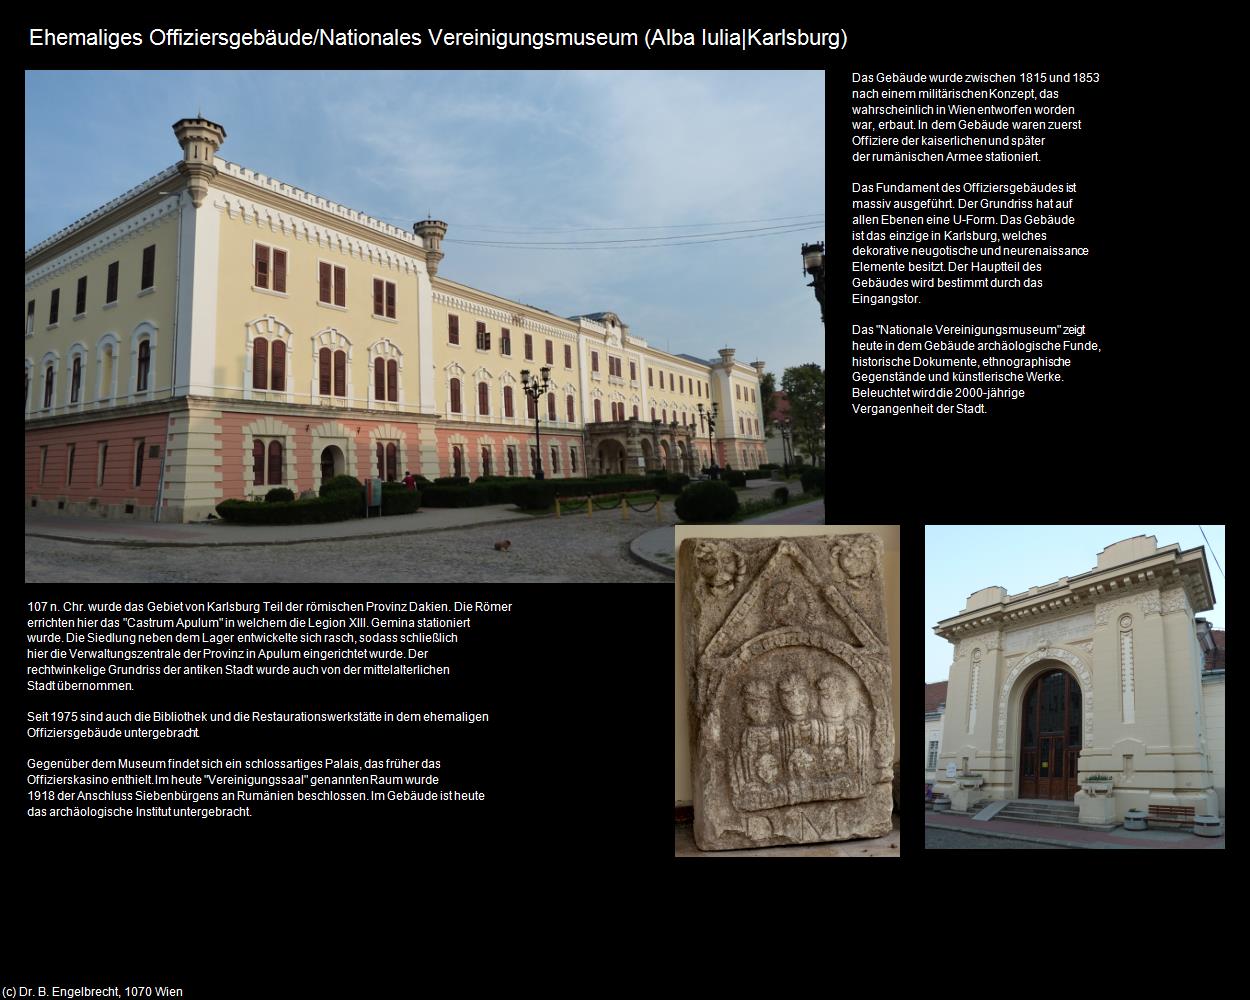 Ehem. Offiziersgebäude/Nationale Vereinigungsmuseum  (Alba Iulia|Karlsburg) in RUMÄNIEN